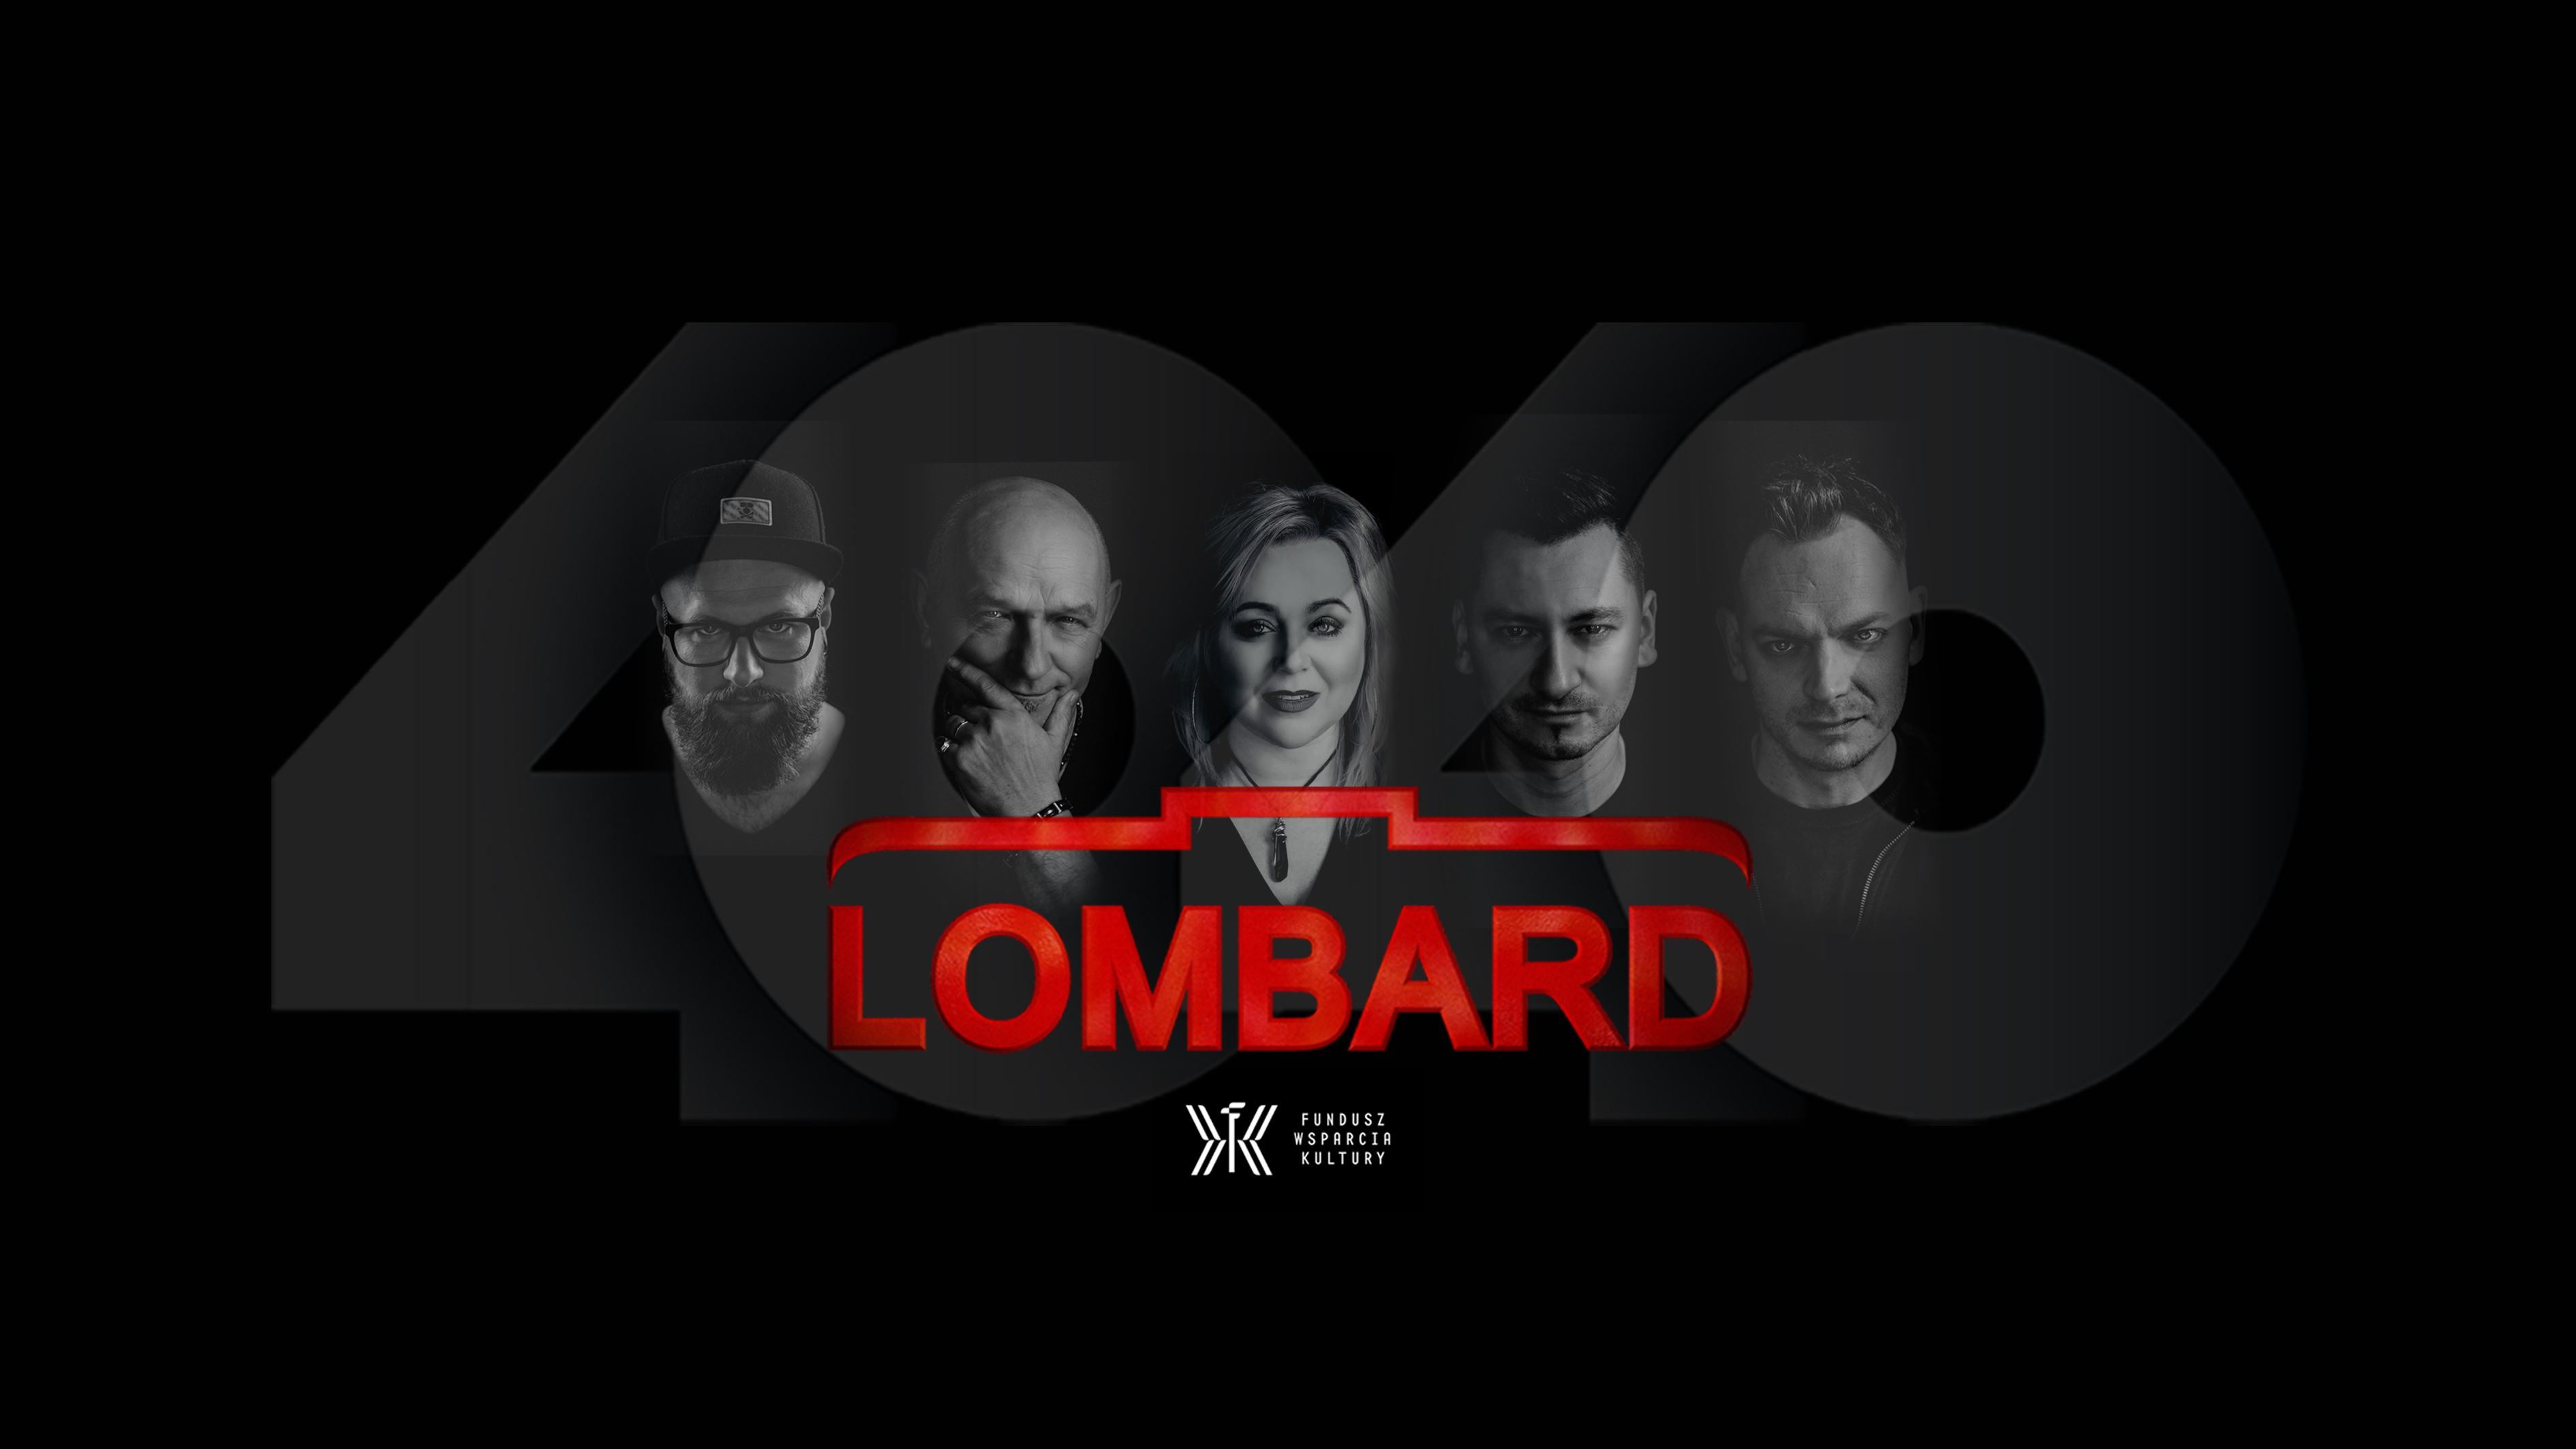 Lombard – 40/40 - Lombard